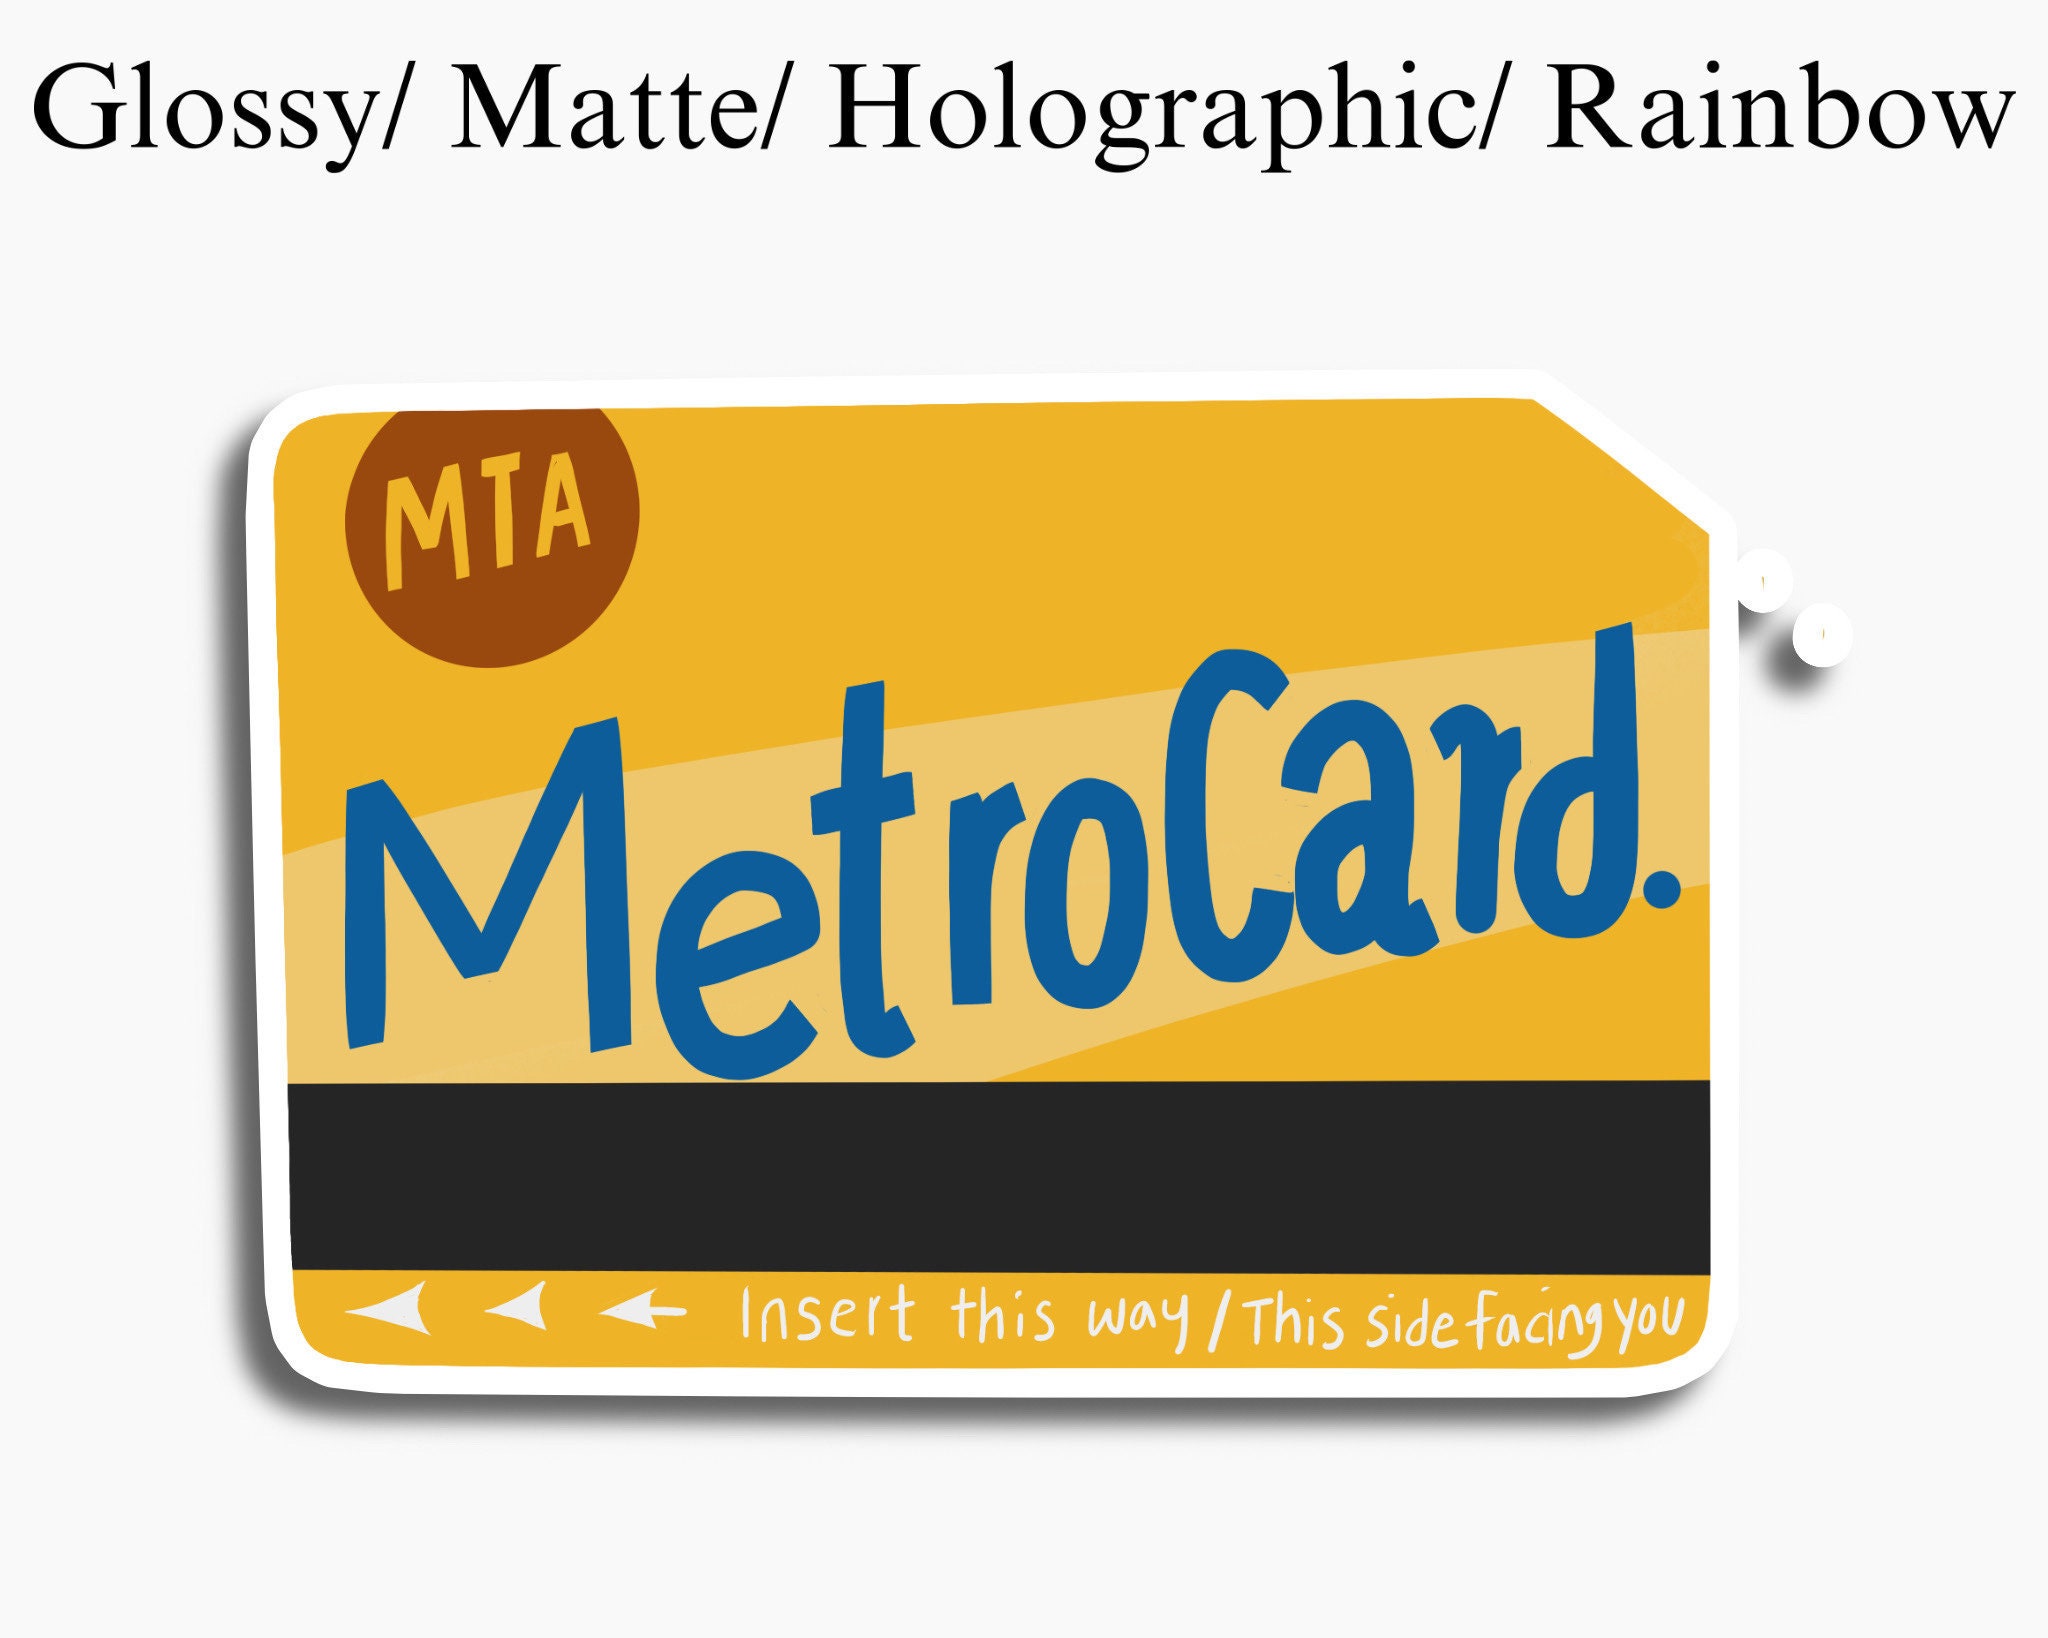 MetroCard Waterproof Case Cell Phone Pouch